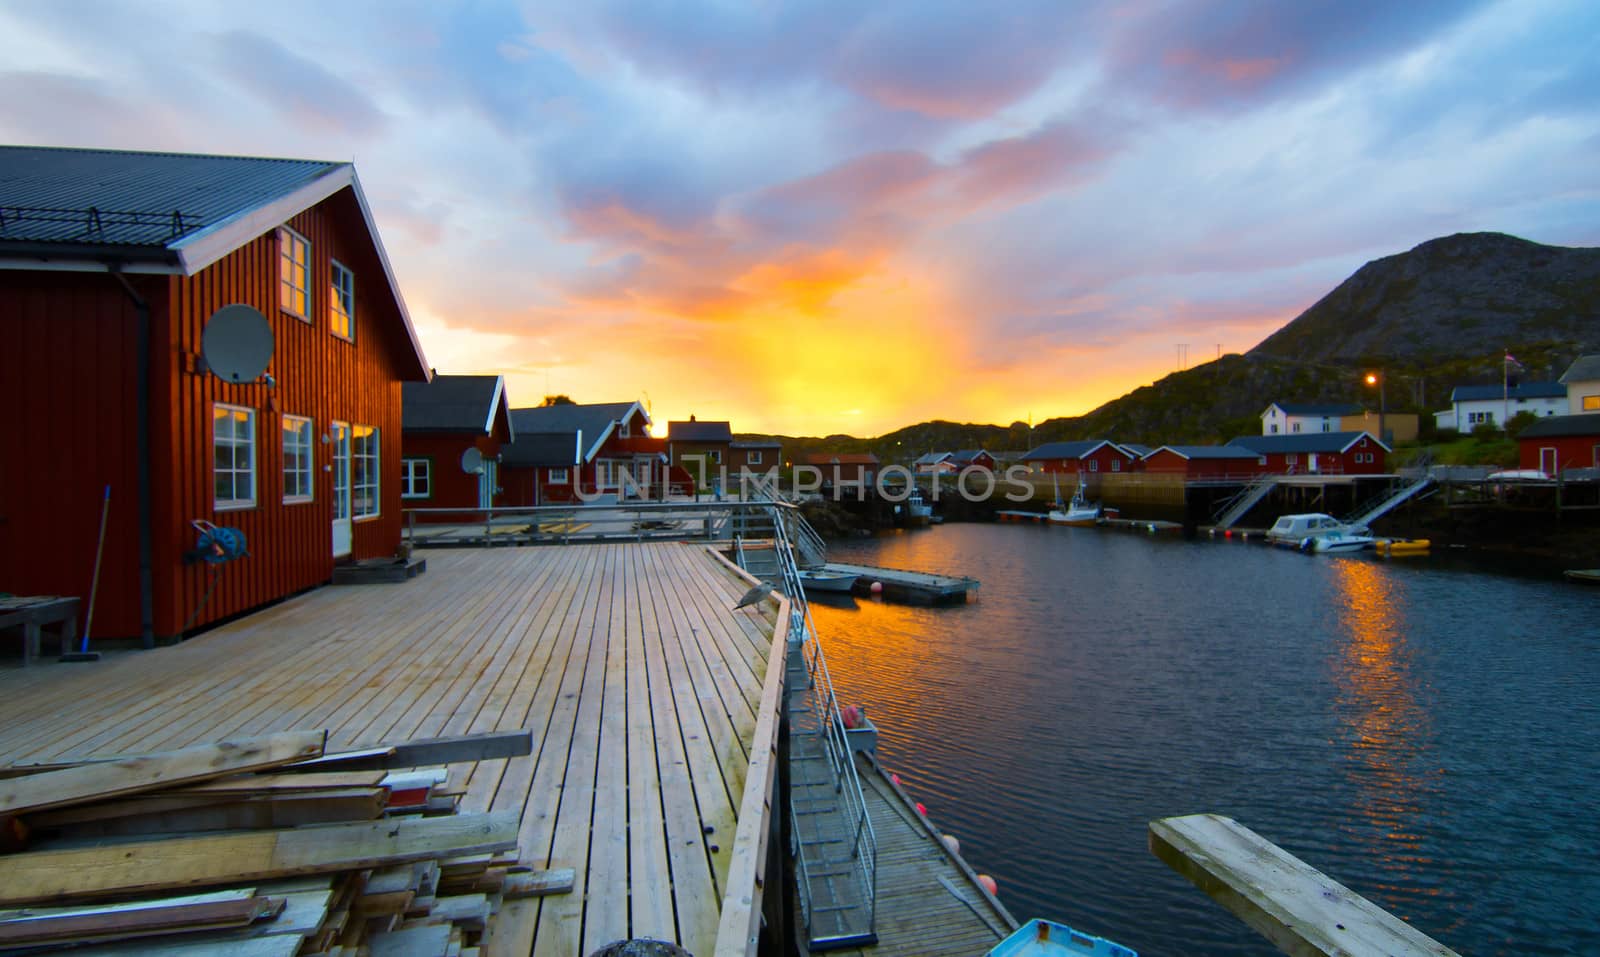 Morning sunrise on the Norwegian island